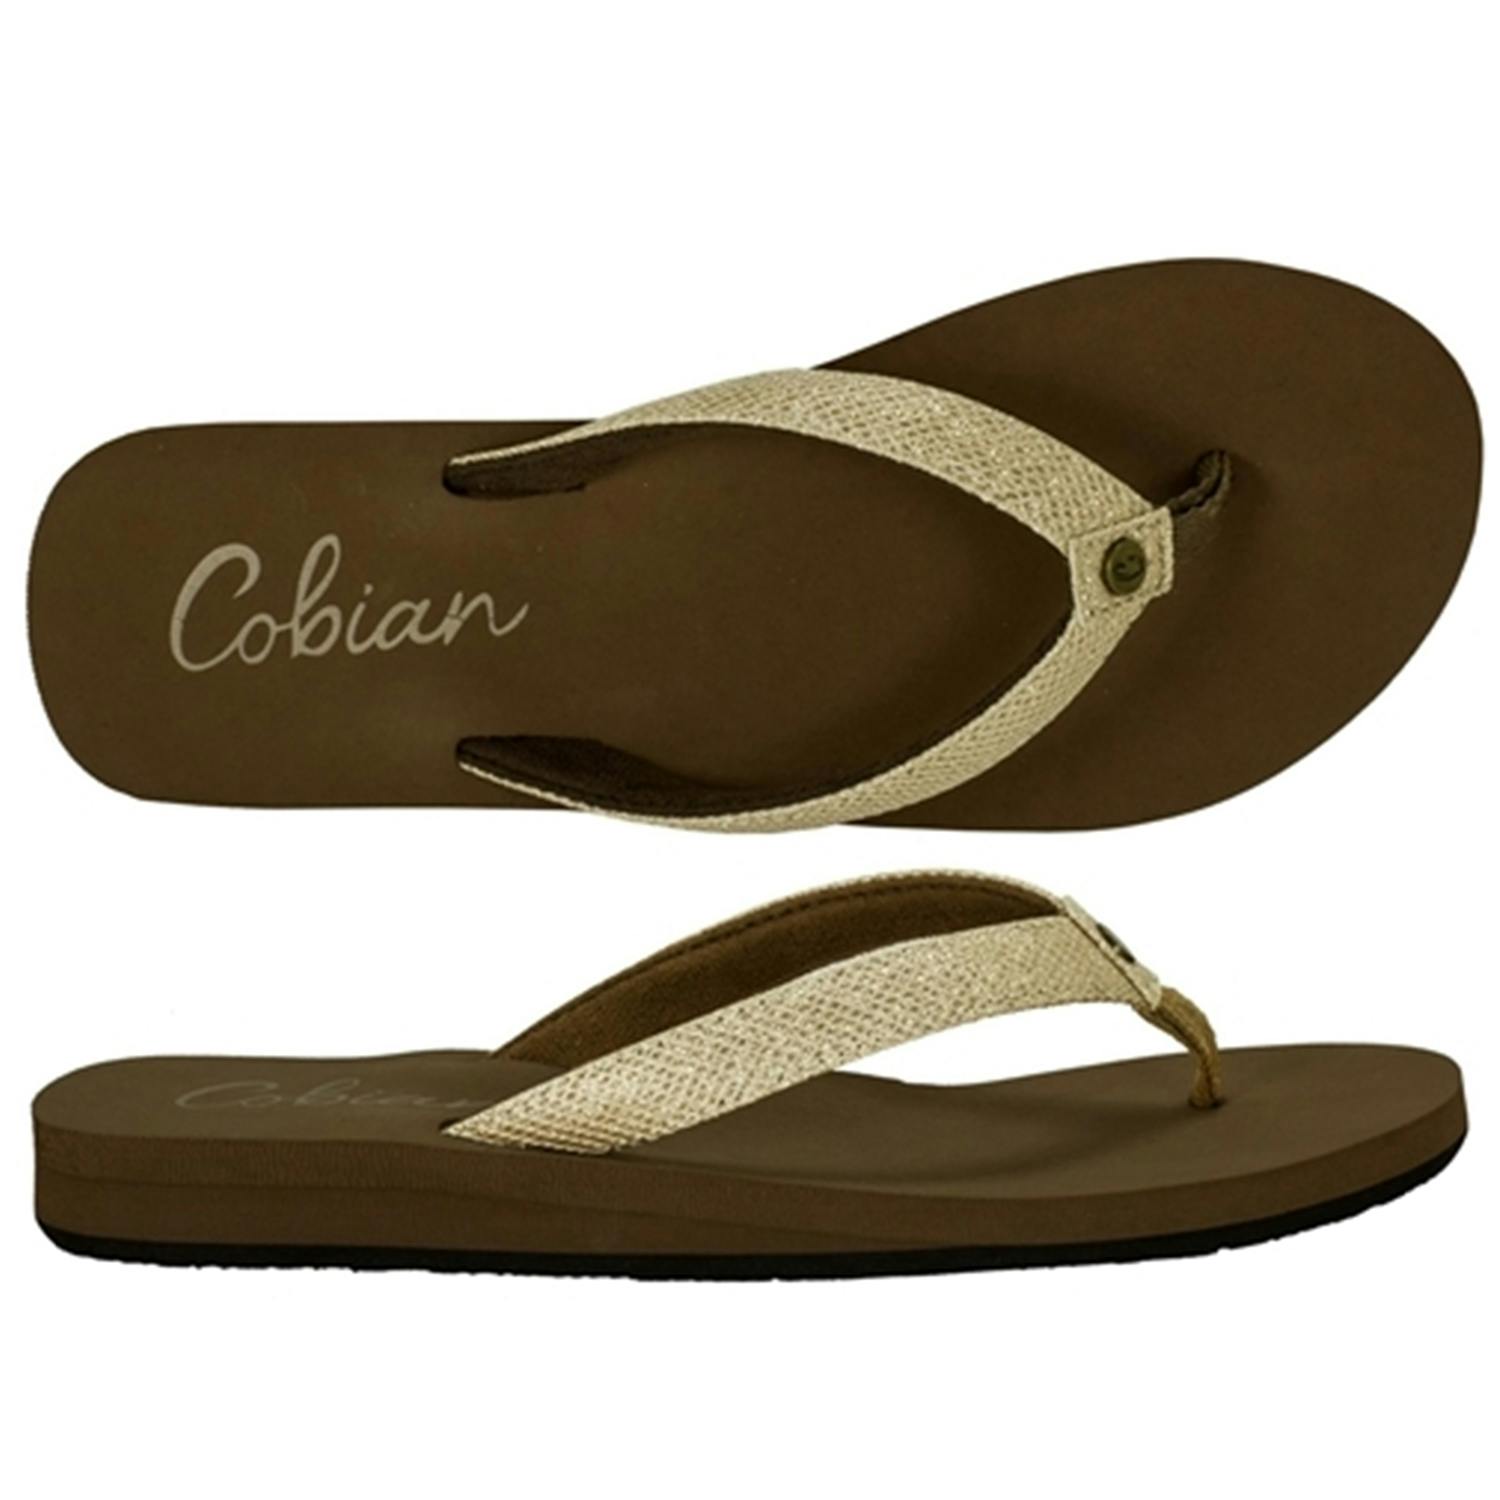 Cobian Fiesta Bounce Sandals (Women’s) Angled View - Tan